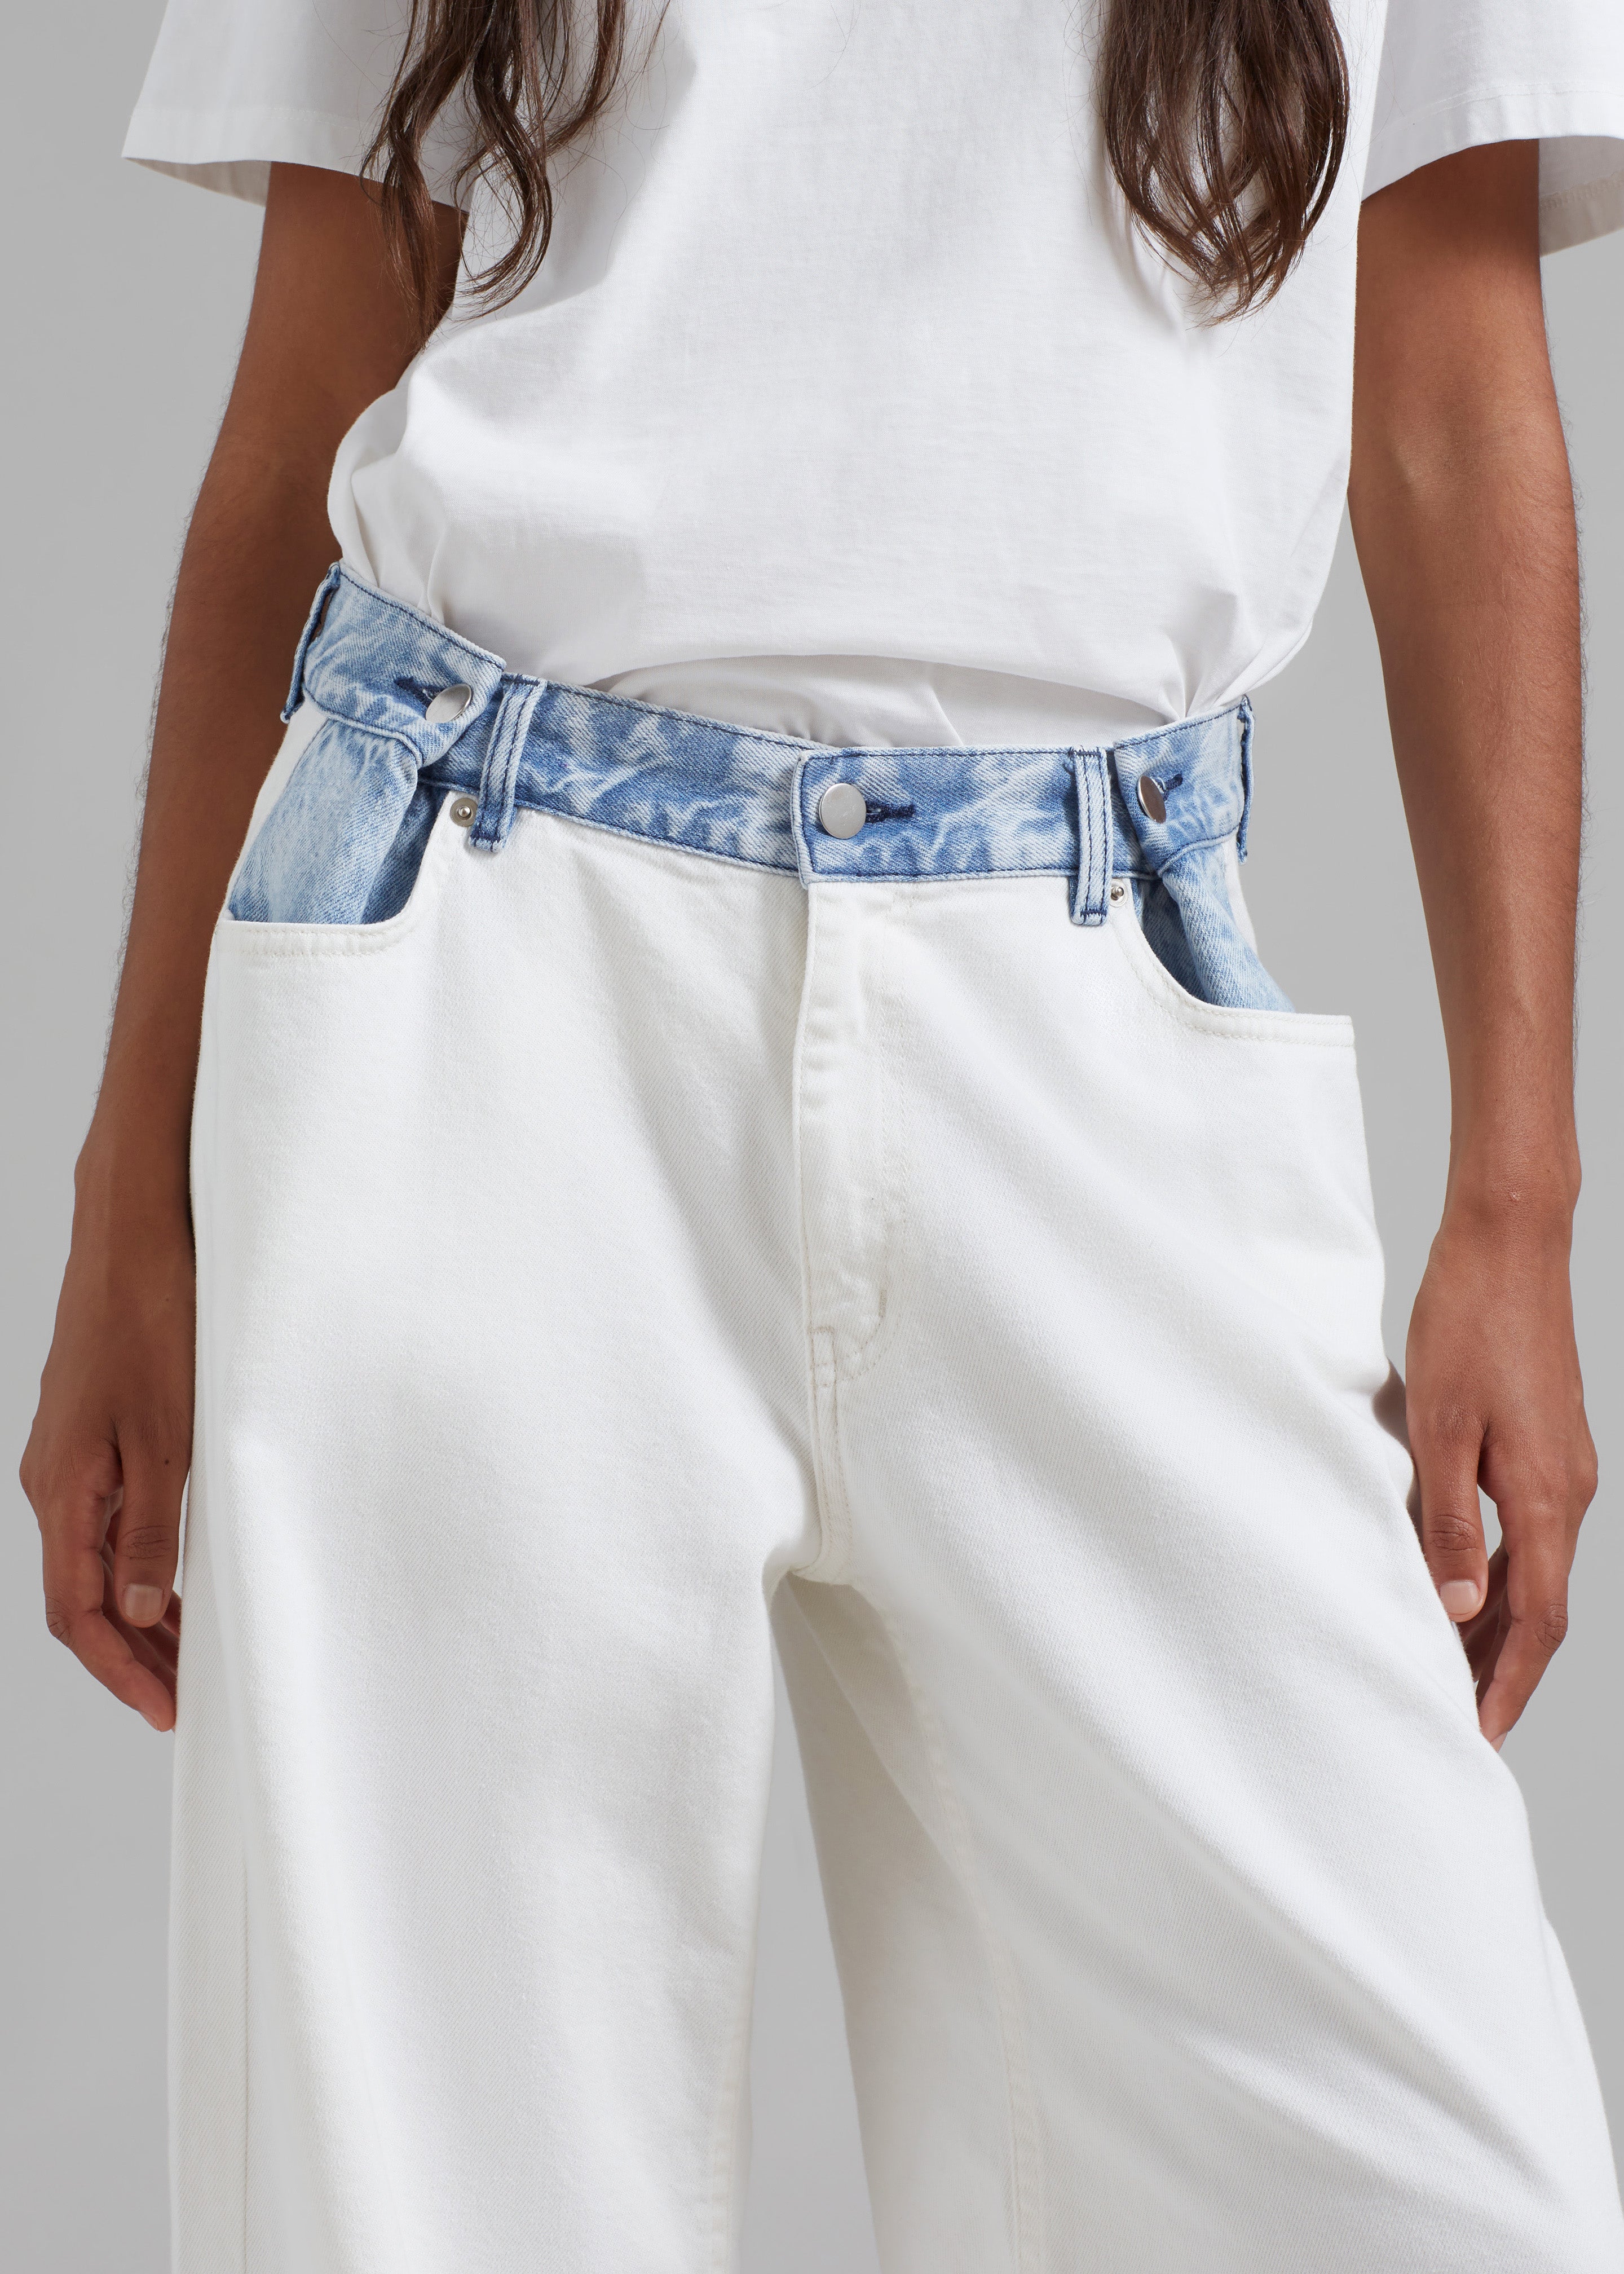 Hayla Contrast Denim Pants - Off White/Blue